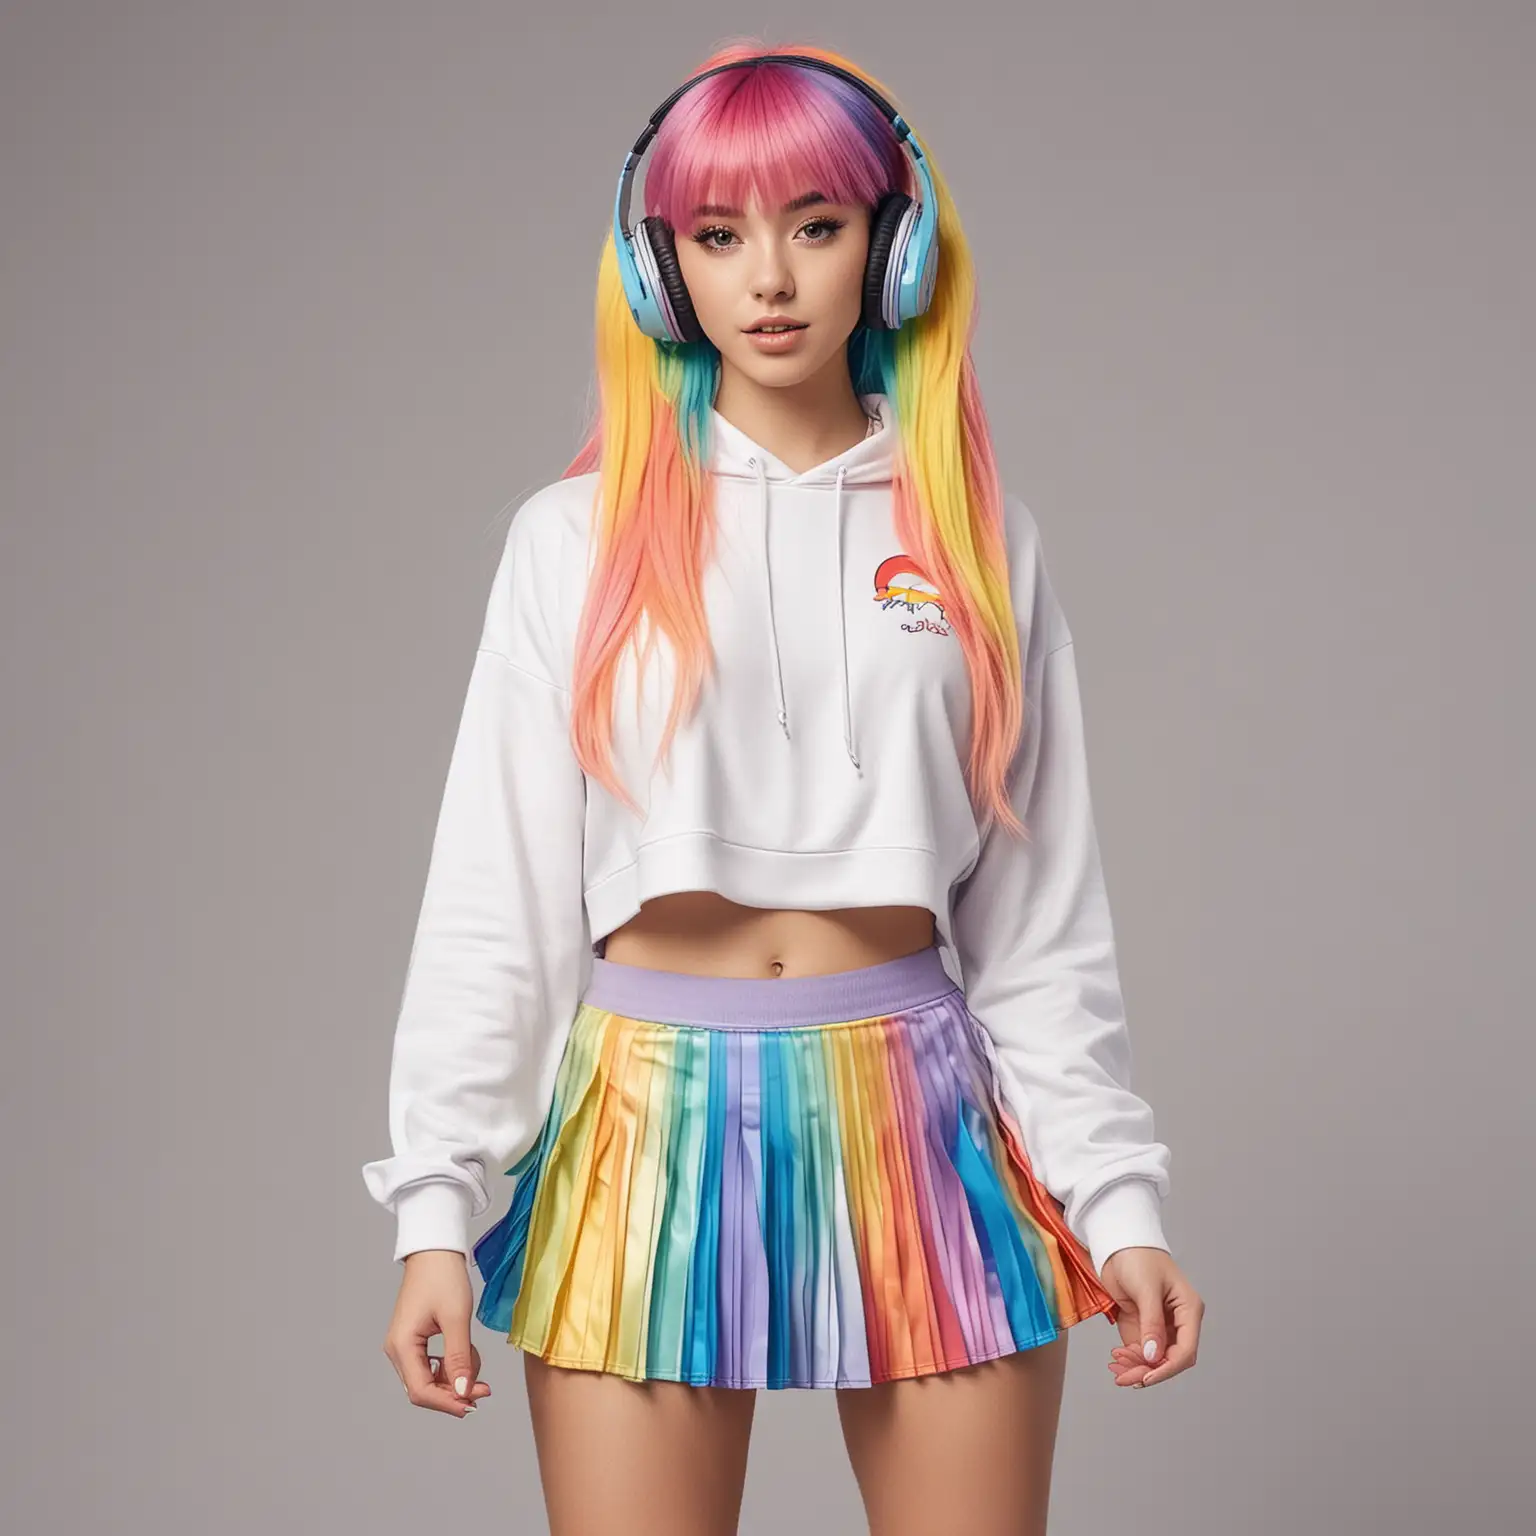 Colorful Kawaii Girl with Rainbow Hair Mini Skirt and Headphones